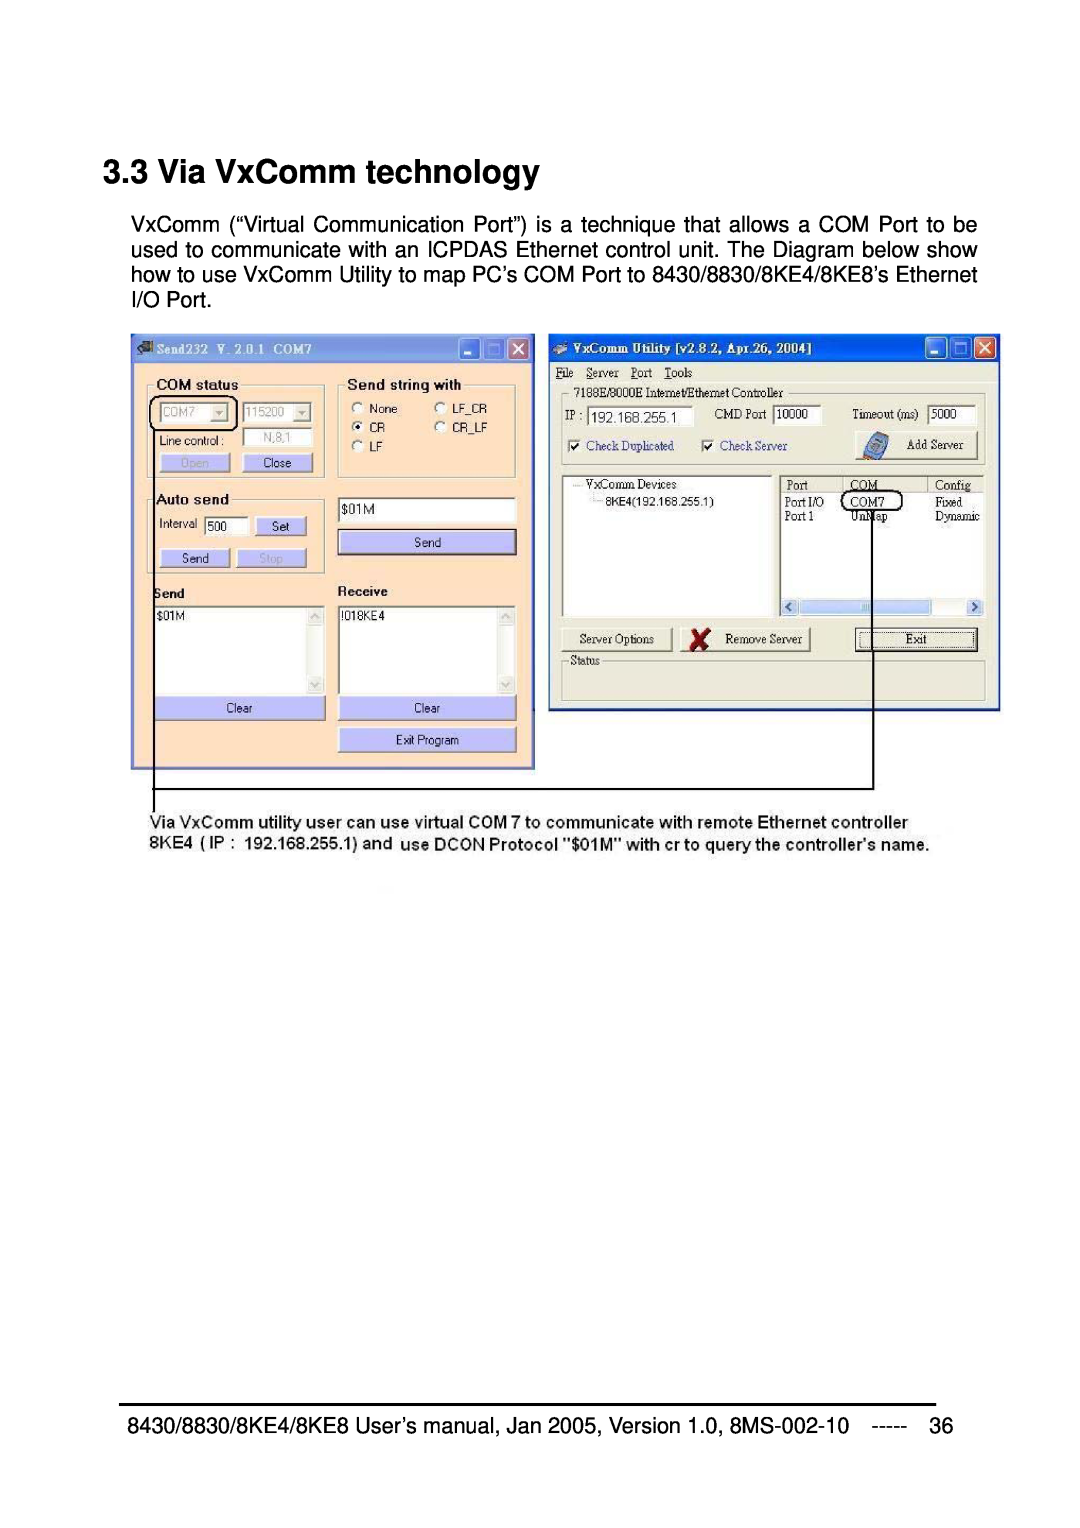 ICP DAS USA user manual Via VxComm technology, 8430/8830/8KE4/8KE8 User’s manual, Jan 2005, Version 1.0, 8MS-002-10 